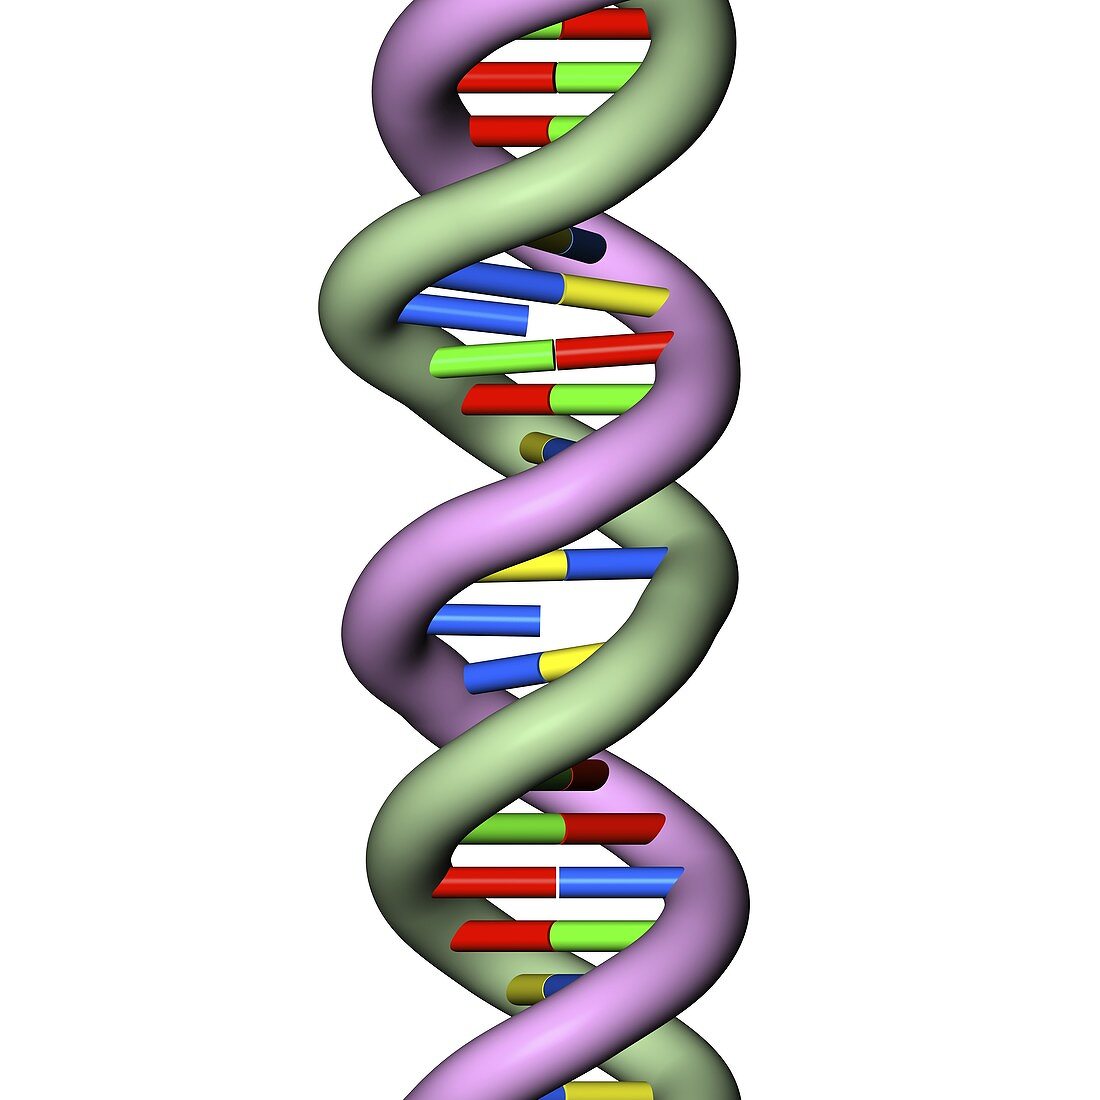 DNA mutations,conceptual image